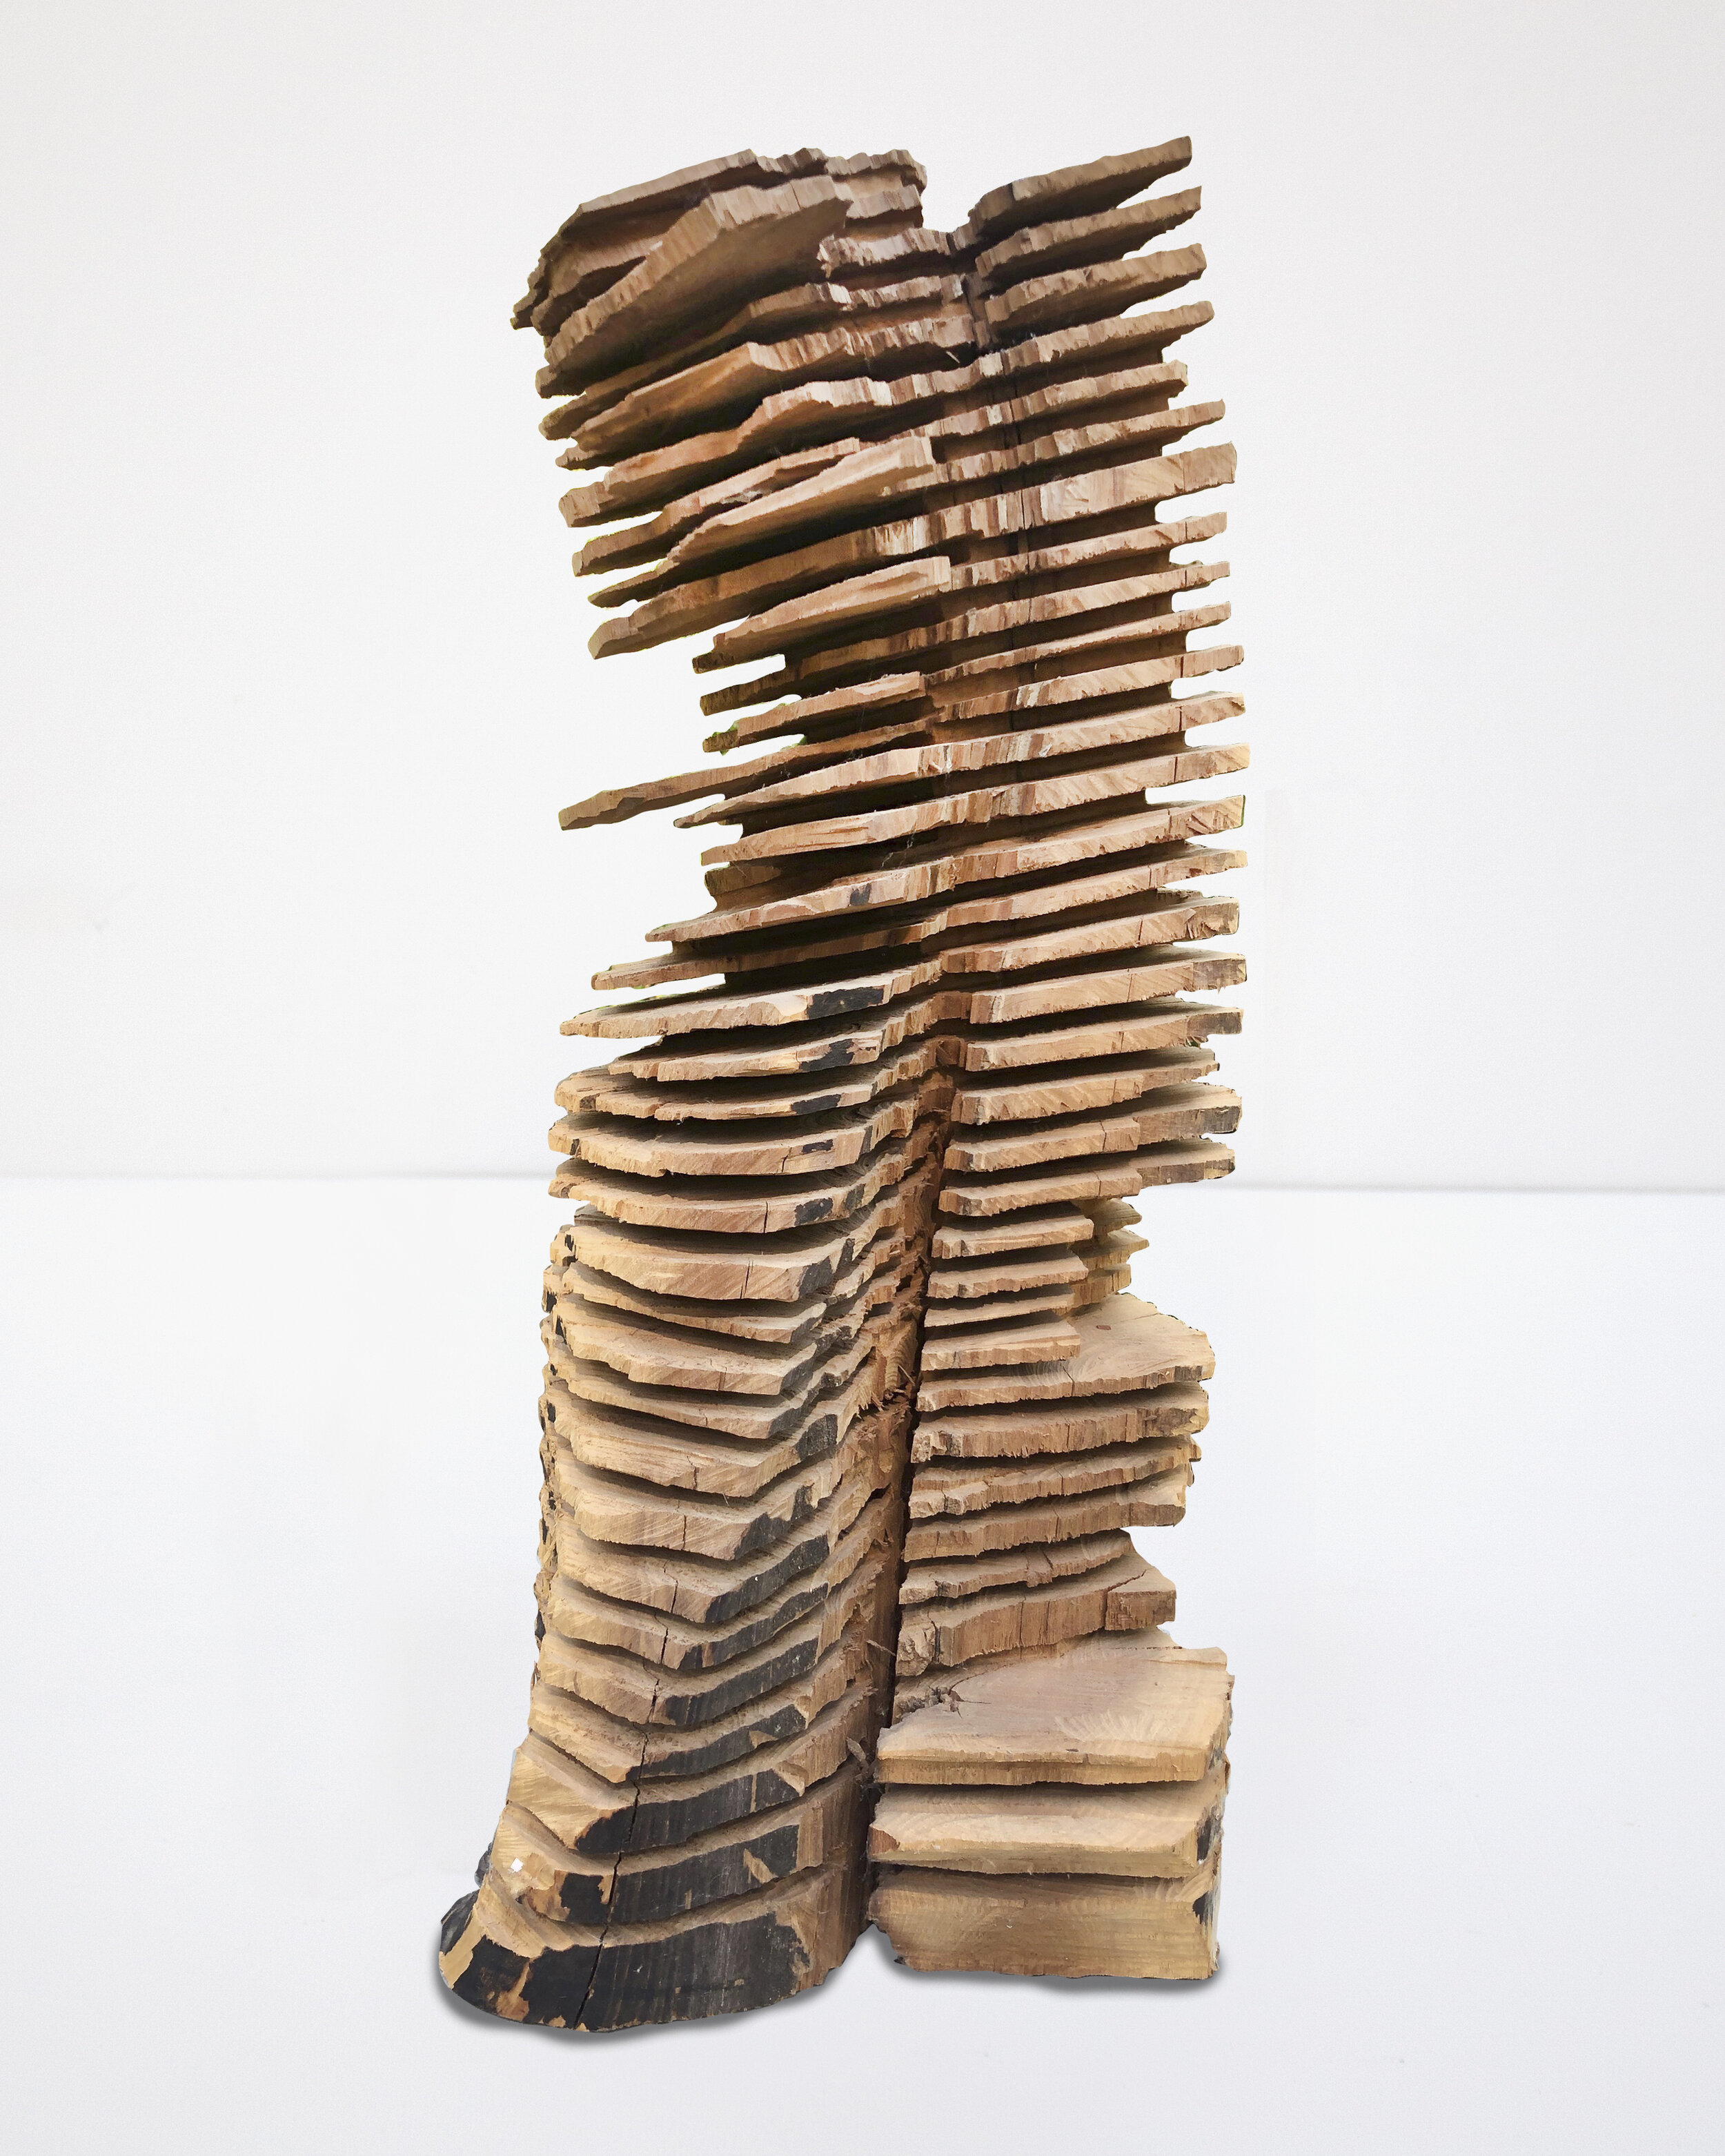  David Nash,  Untitled,  2003 Wood | 19 x 10 x 7 inches | HG15434 